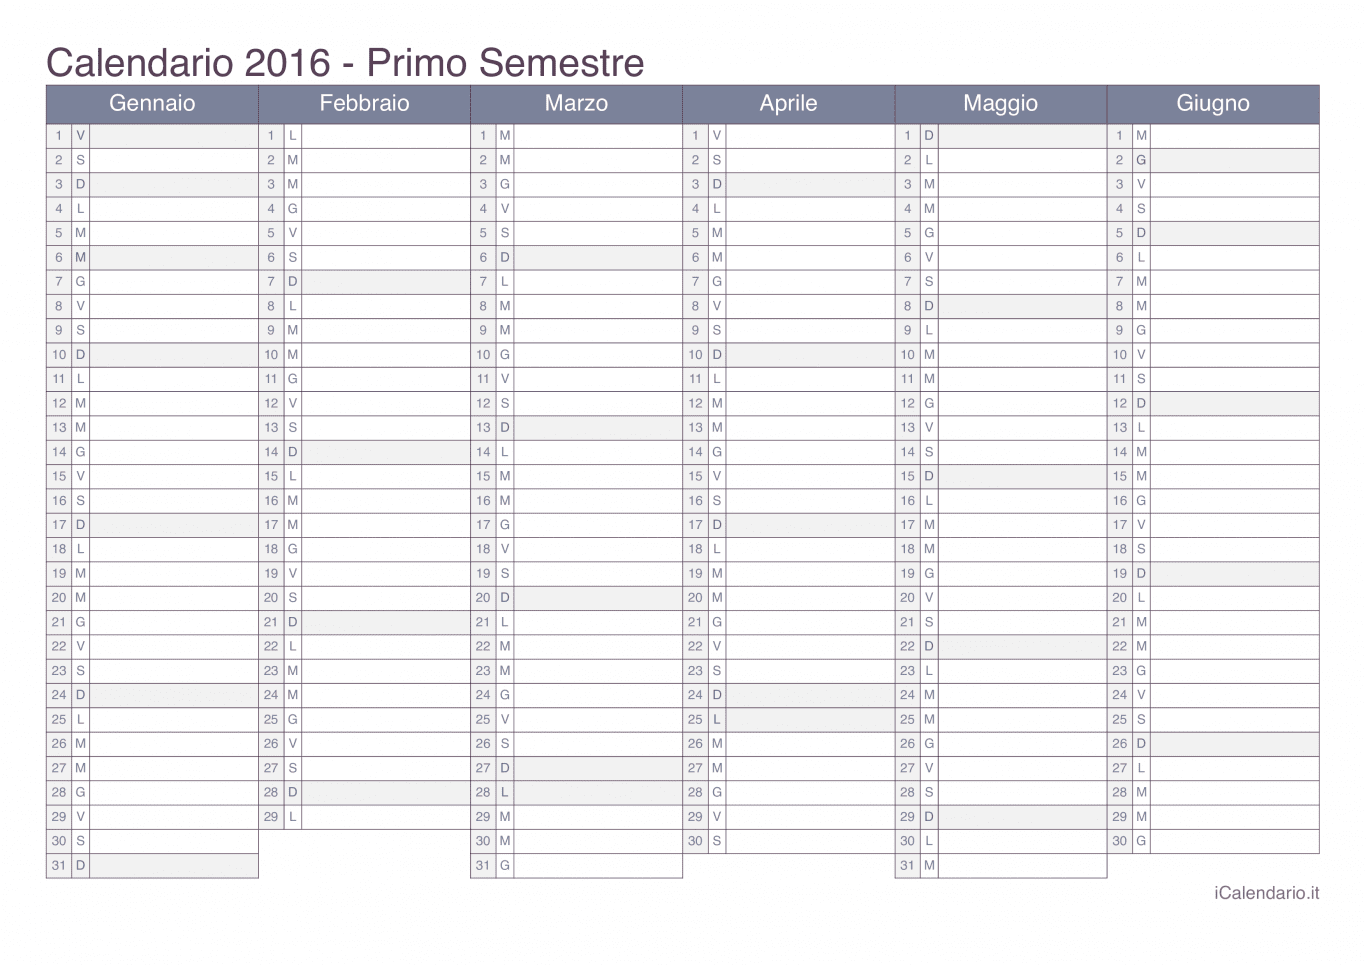 Calendario semestrale 2016 - Office